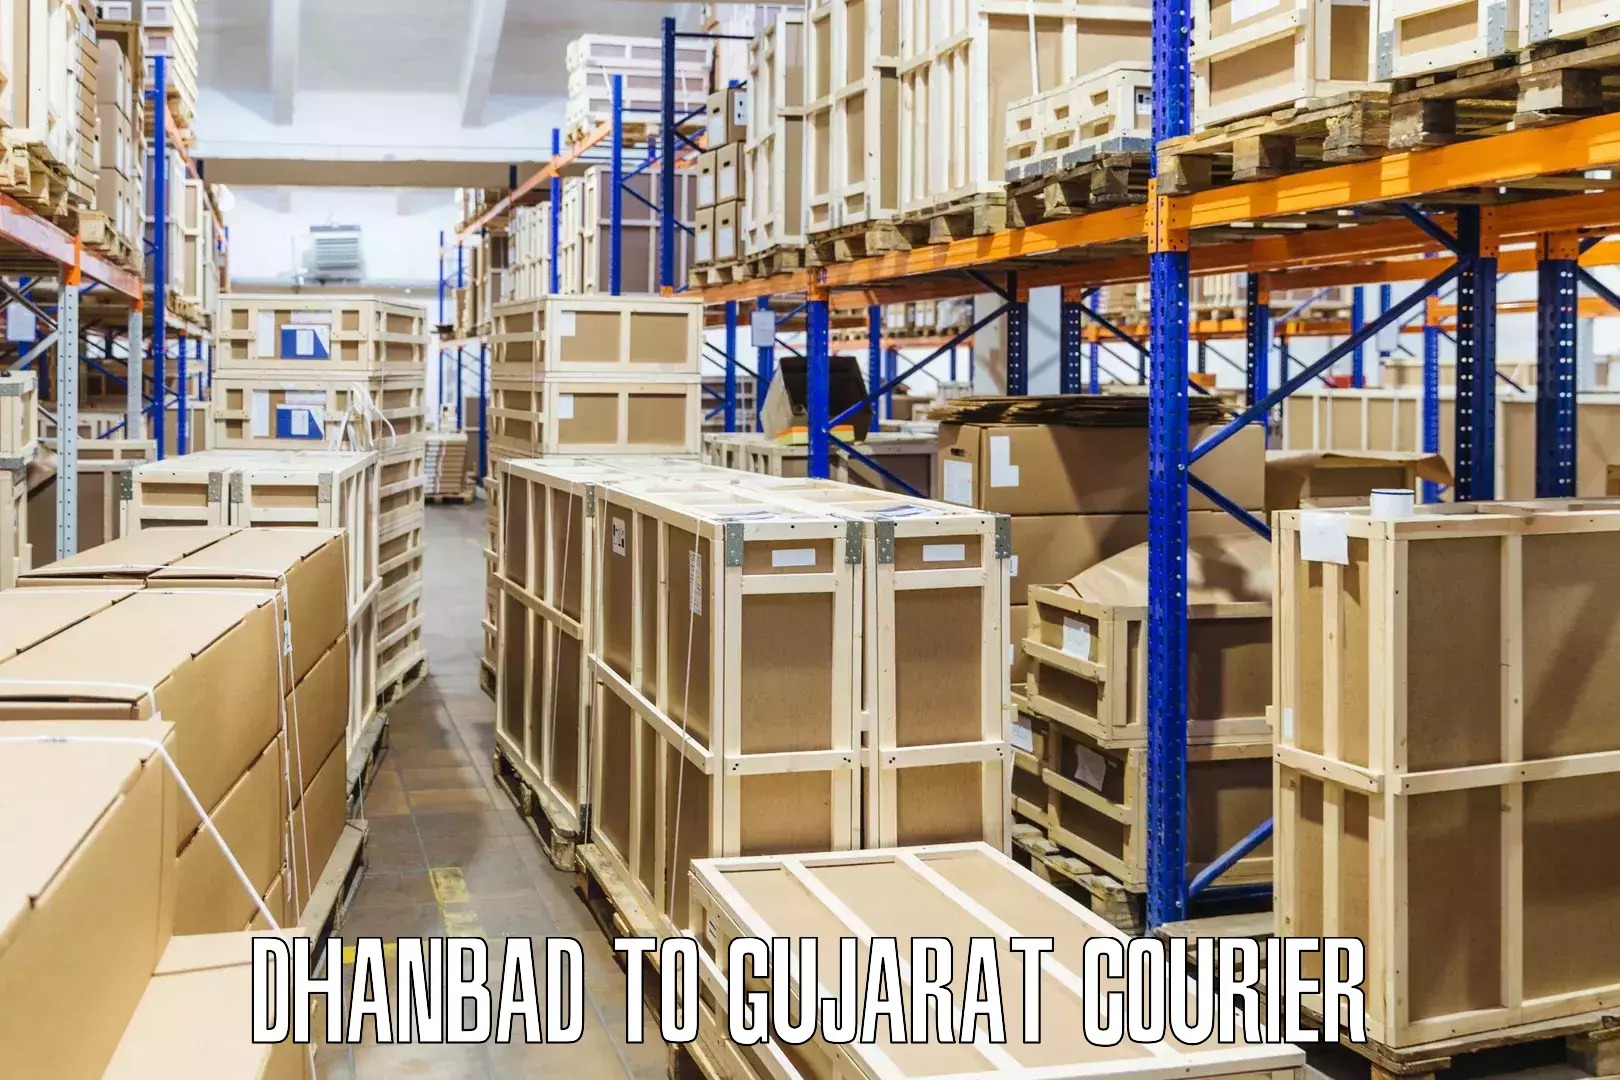 Global logistics network Dhanbad to Gondal